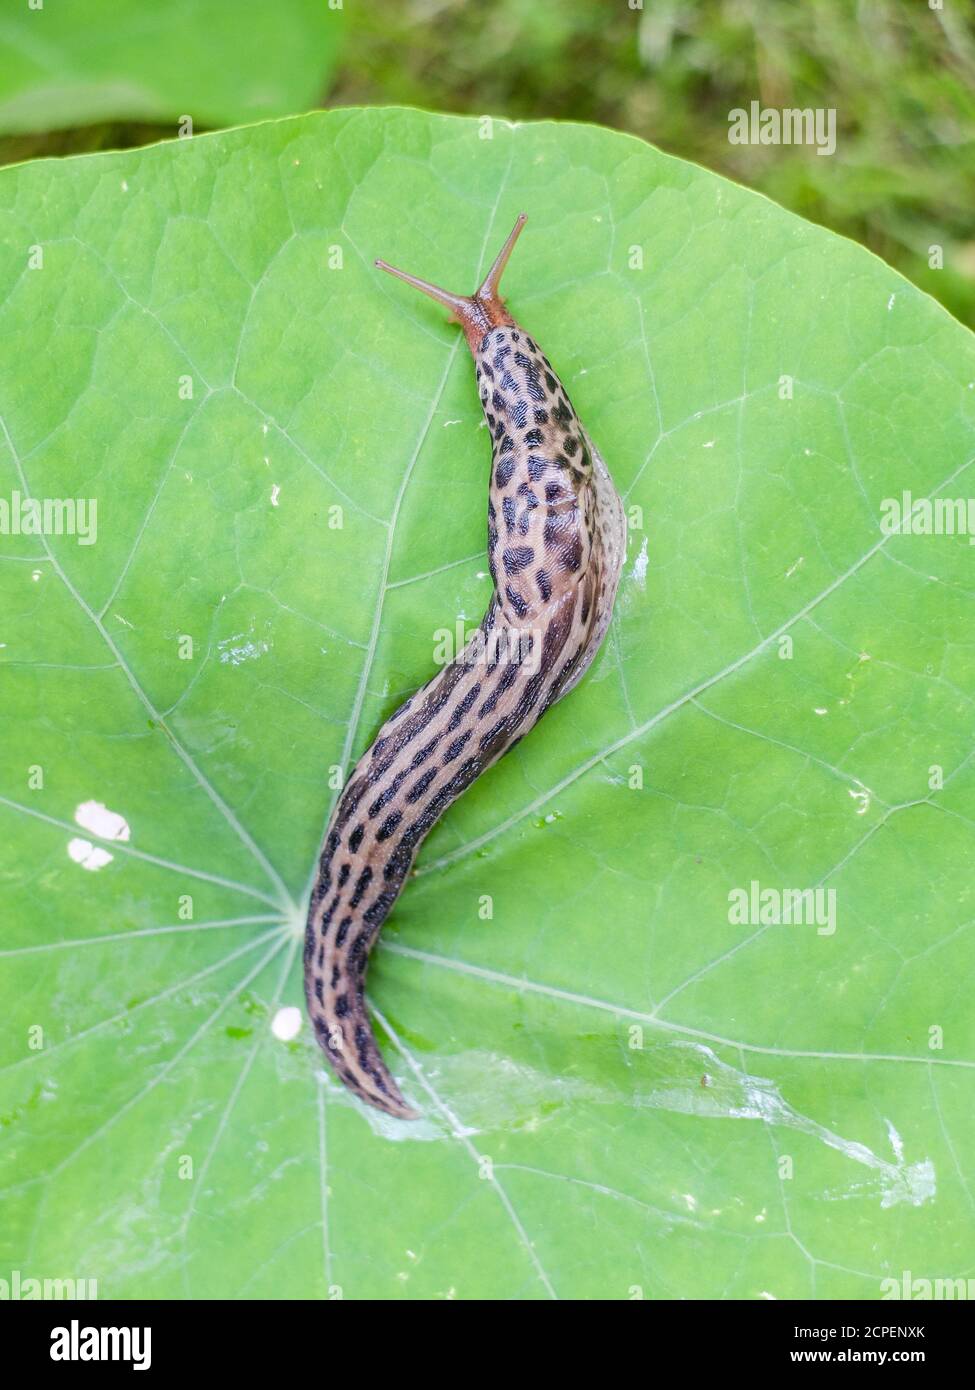 Tiger snail (Limax maximus) on the leaf of a nasturtium (Tropaeolum majus) Stock Photo